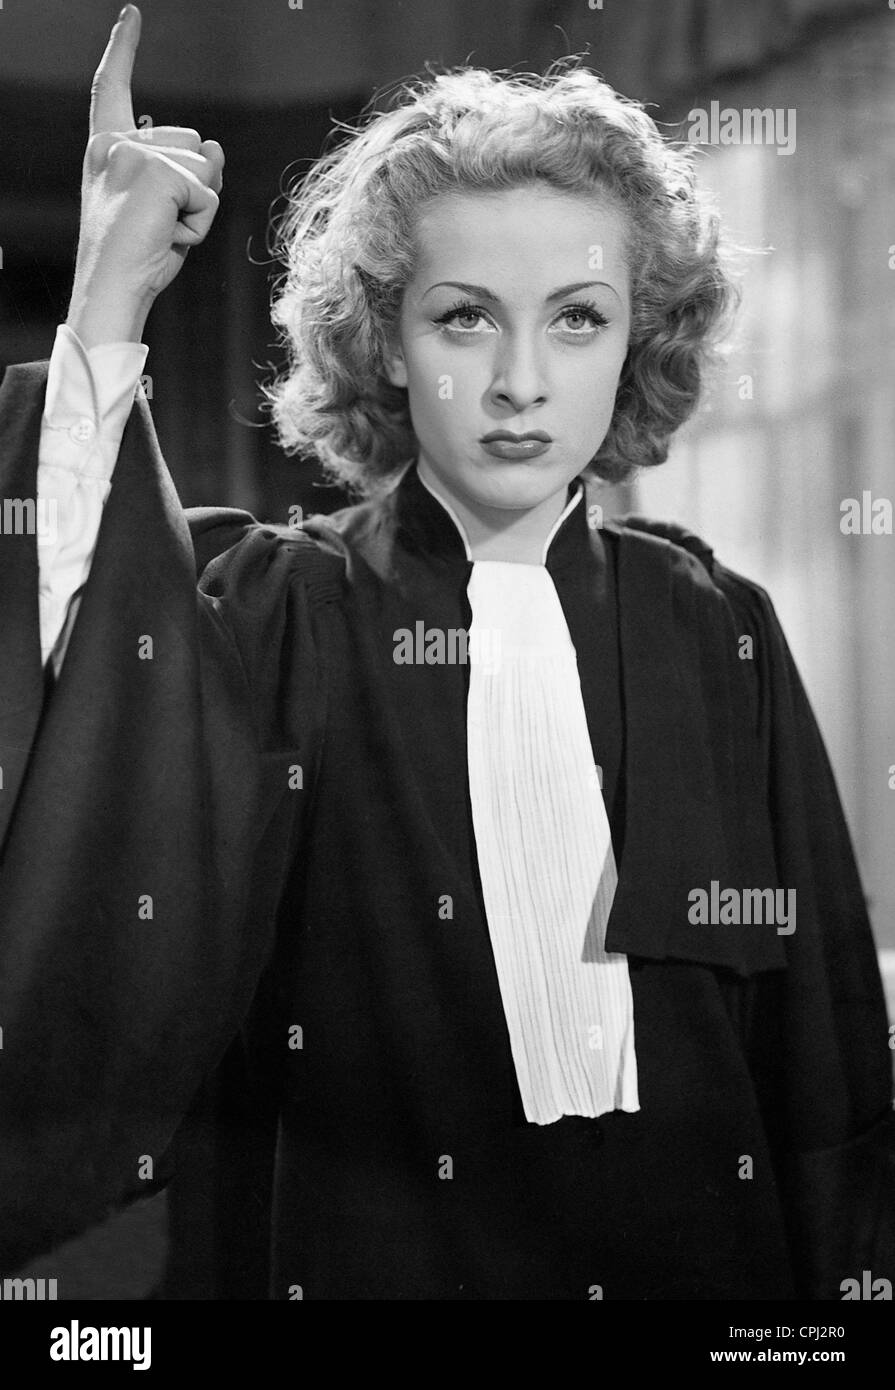 Danielle Darrieux in 'Onu mauvais garcon", 1936 Foto Stock